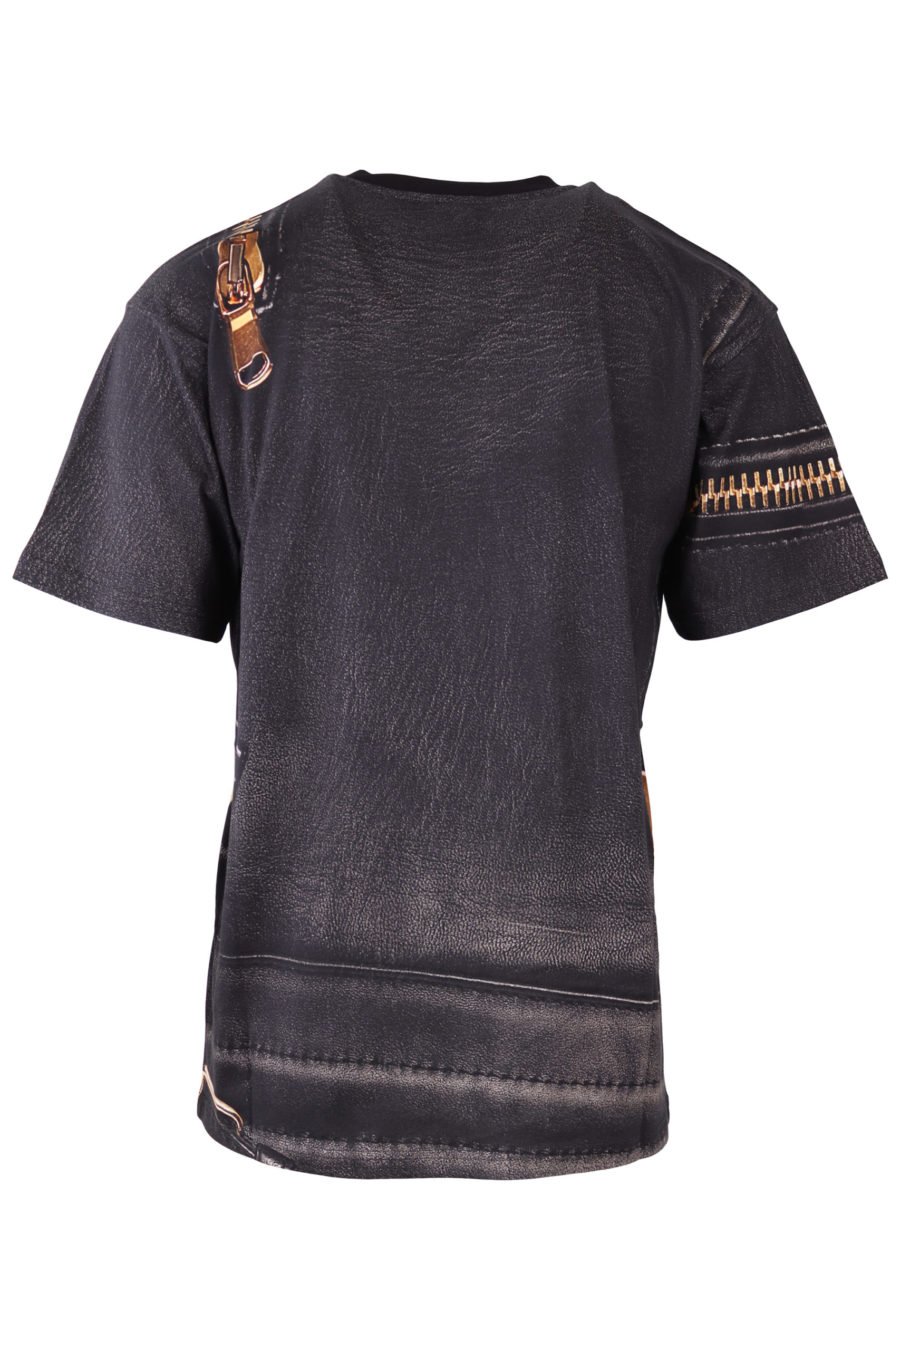 Camiseta Moschino Couture negra con cremallera doradas - IMG 6516 scaled